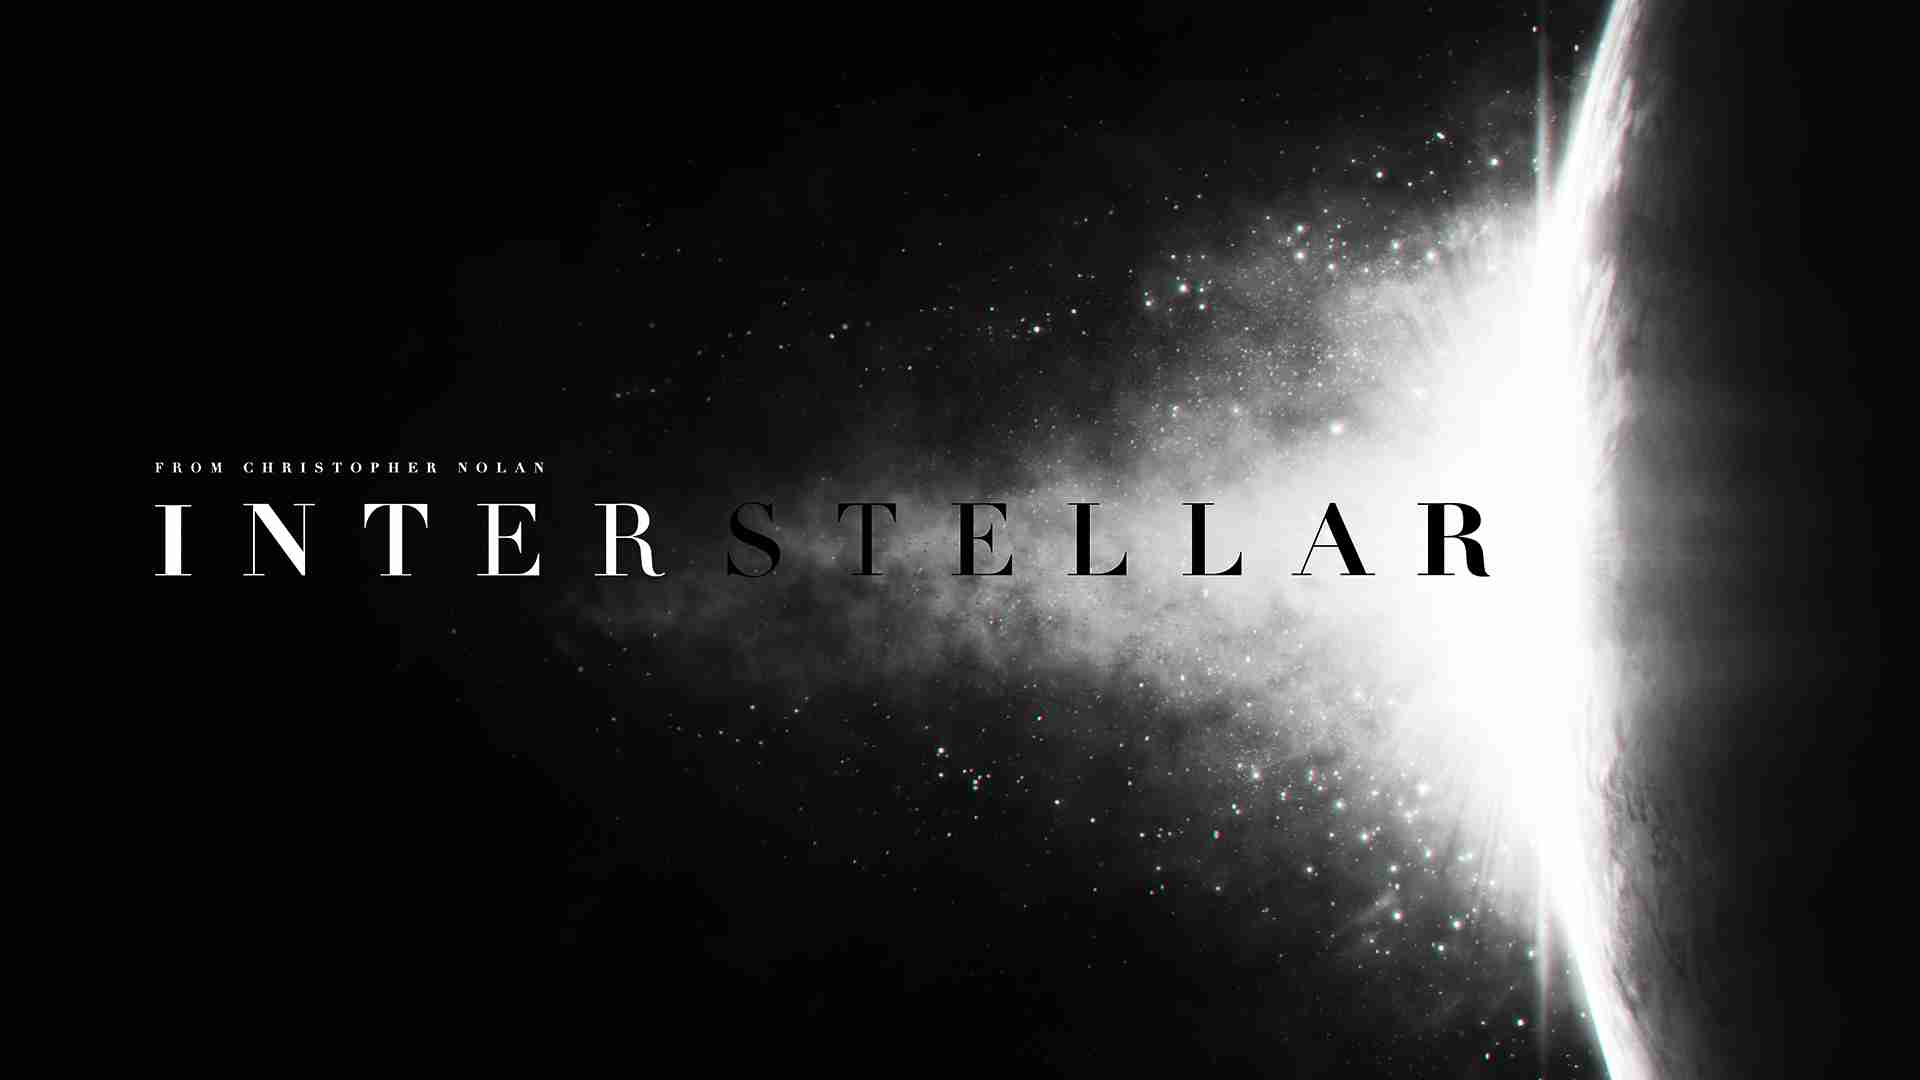 Recensione : “Interstellar” di Christopher Nolan